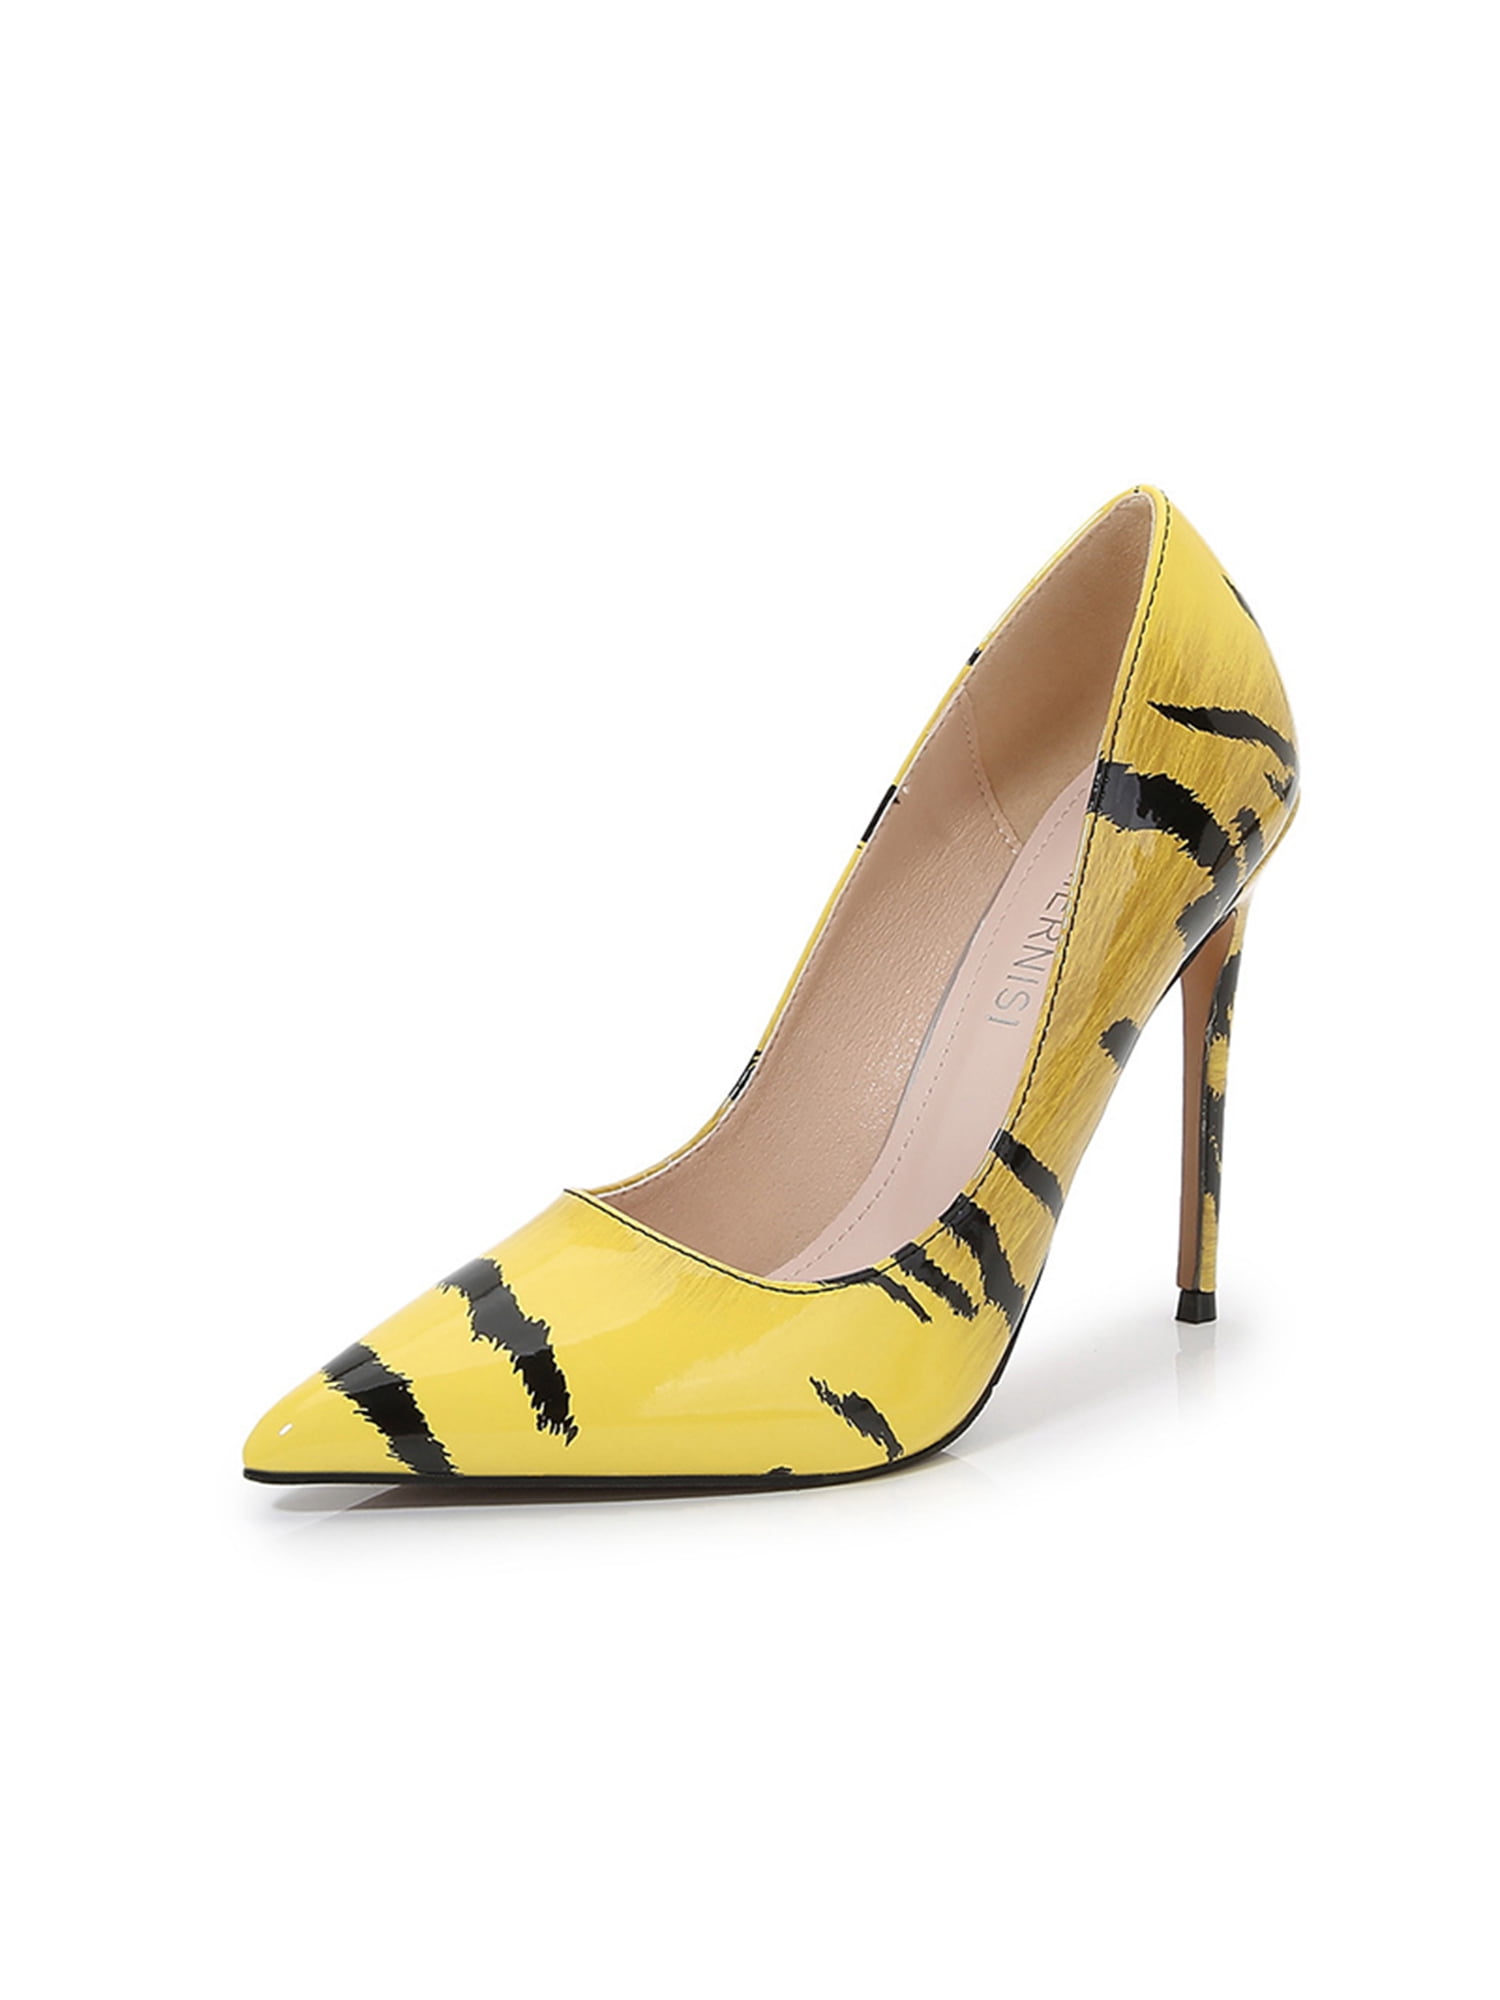 Mix No. 6 House In Pumps Women's 6M Yellow/Black Steelers/Hawkeyes Heels/Shoes  | eBay